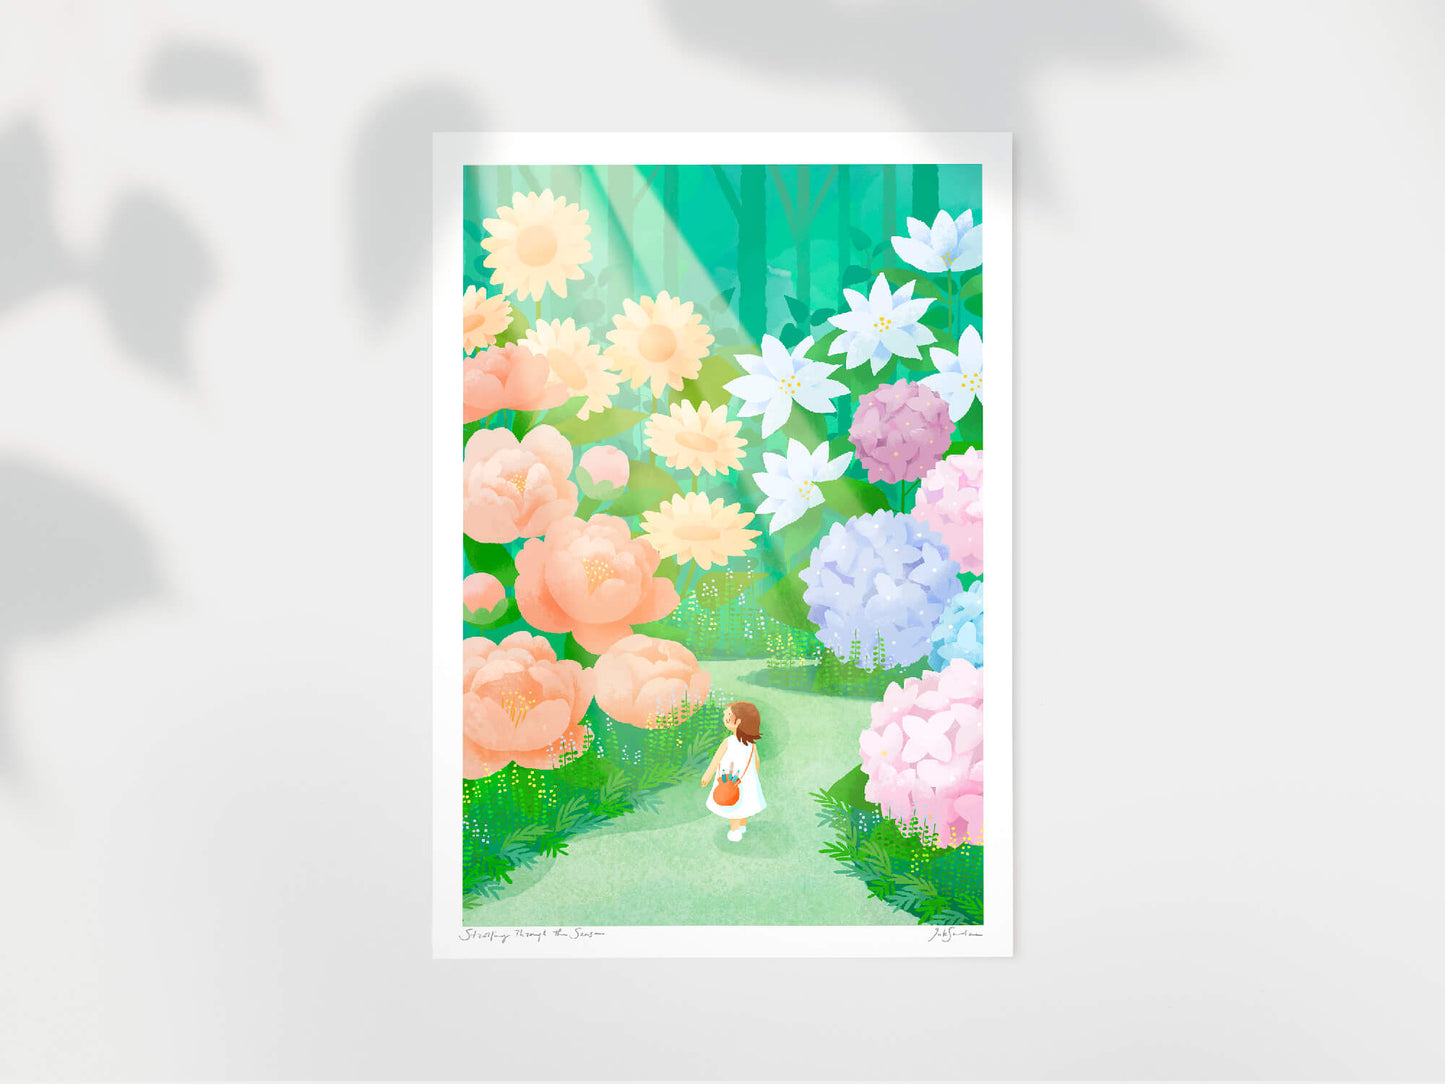 Strolling Through the Season 四季散步 - Poster